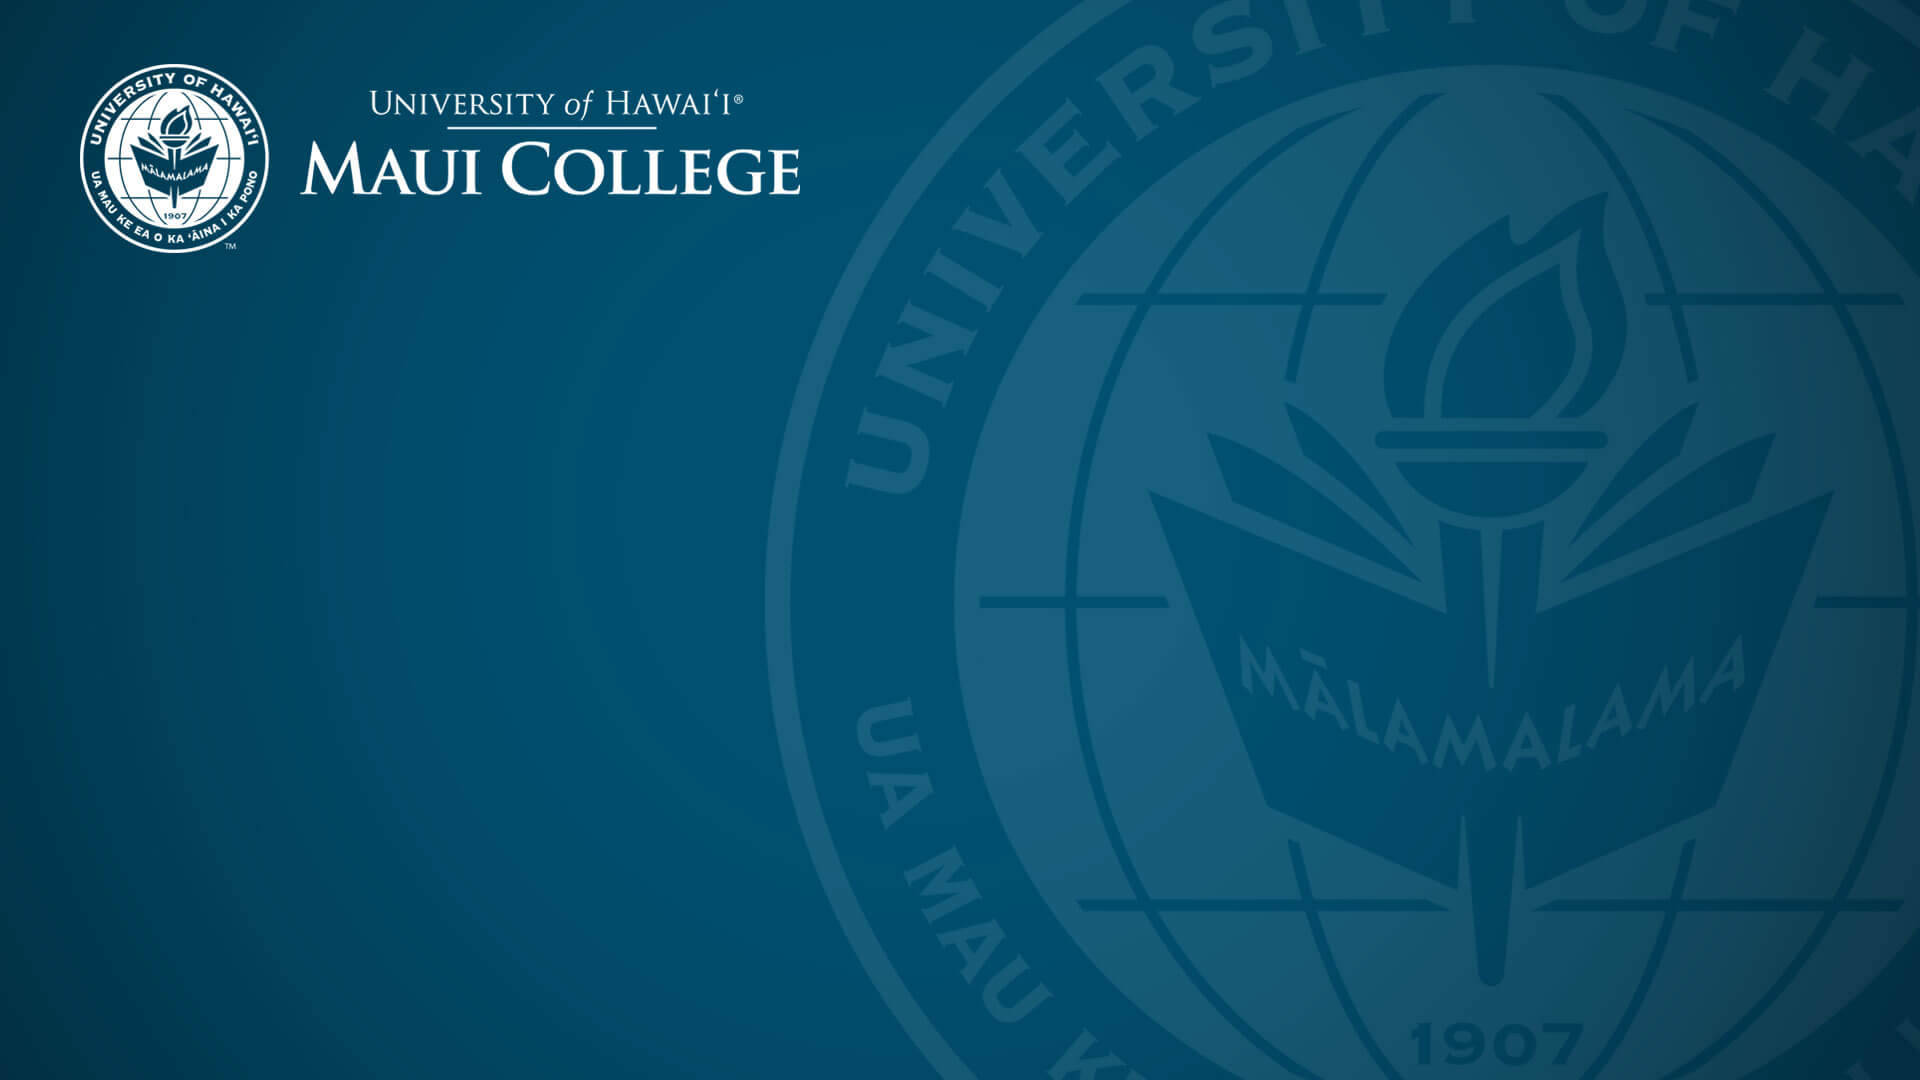 University of Hawaii Maui College Logo Wallpaper